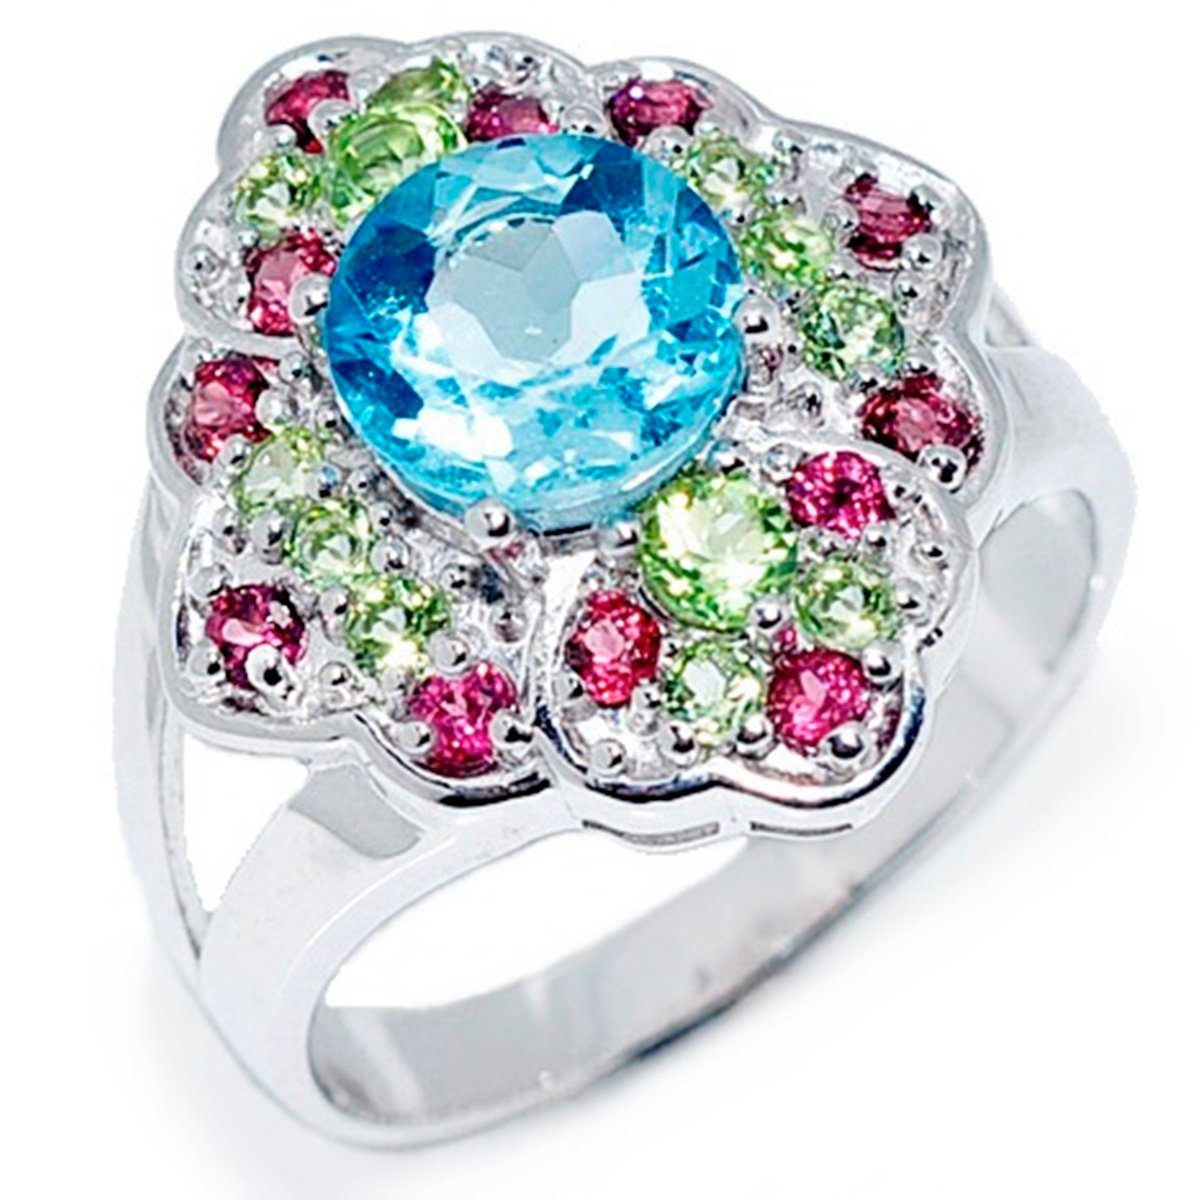 Goldene Hufeisen Silberring Blautopas Granat Peridot Ring aus 925  Sterlingsilber Damen echte Edelsteine Fingerring, Einzelstück, Handarbeit